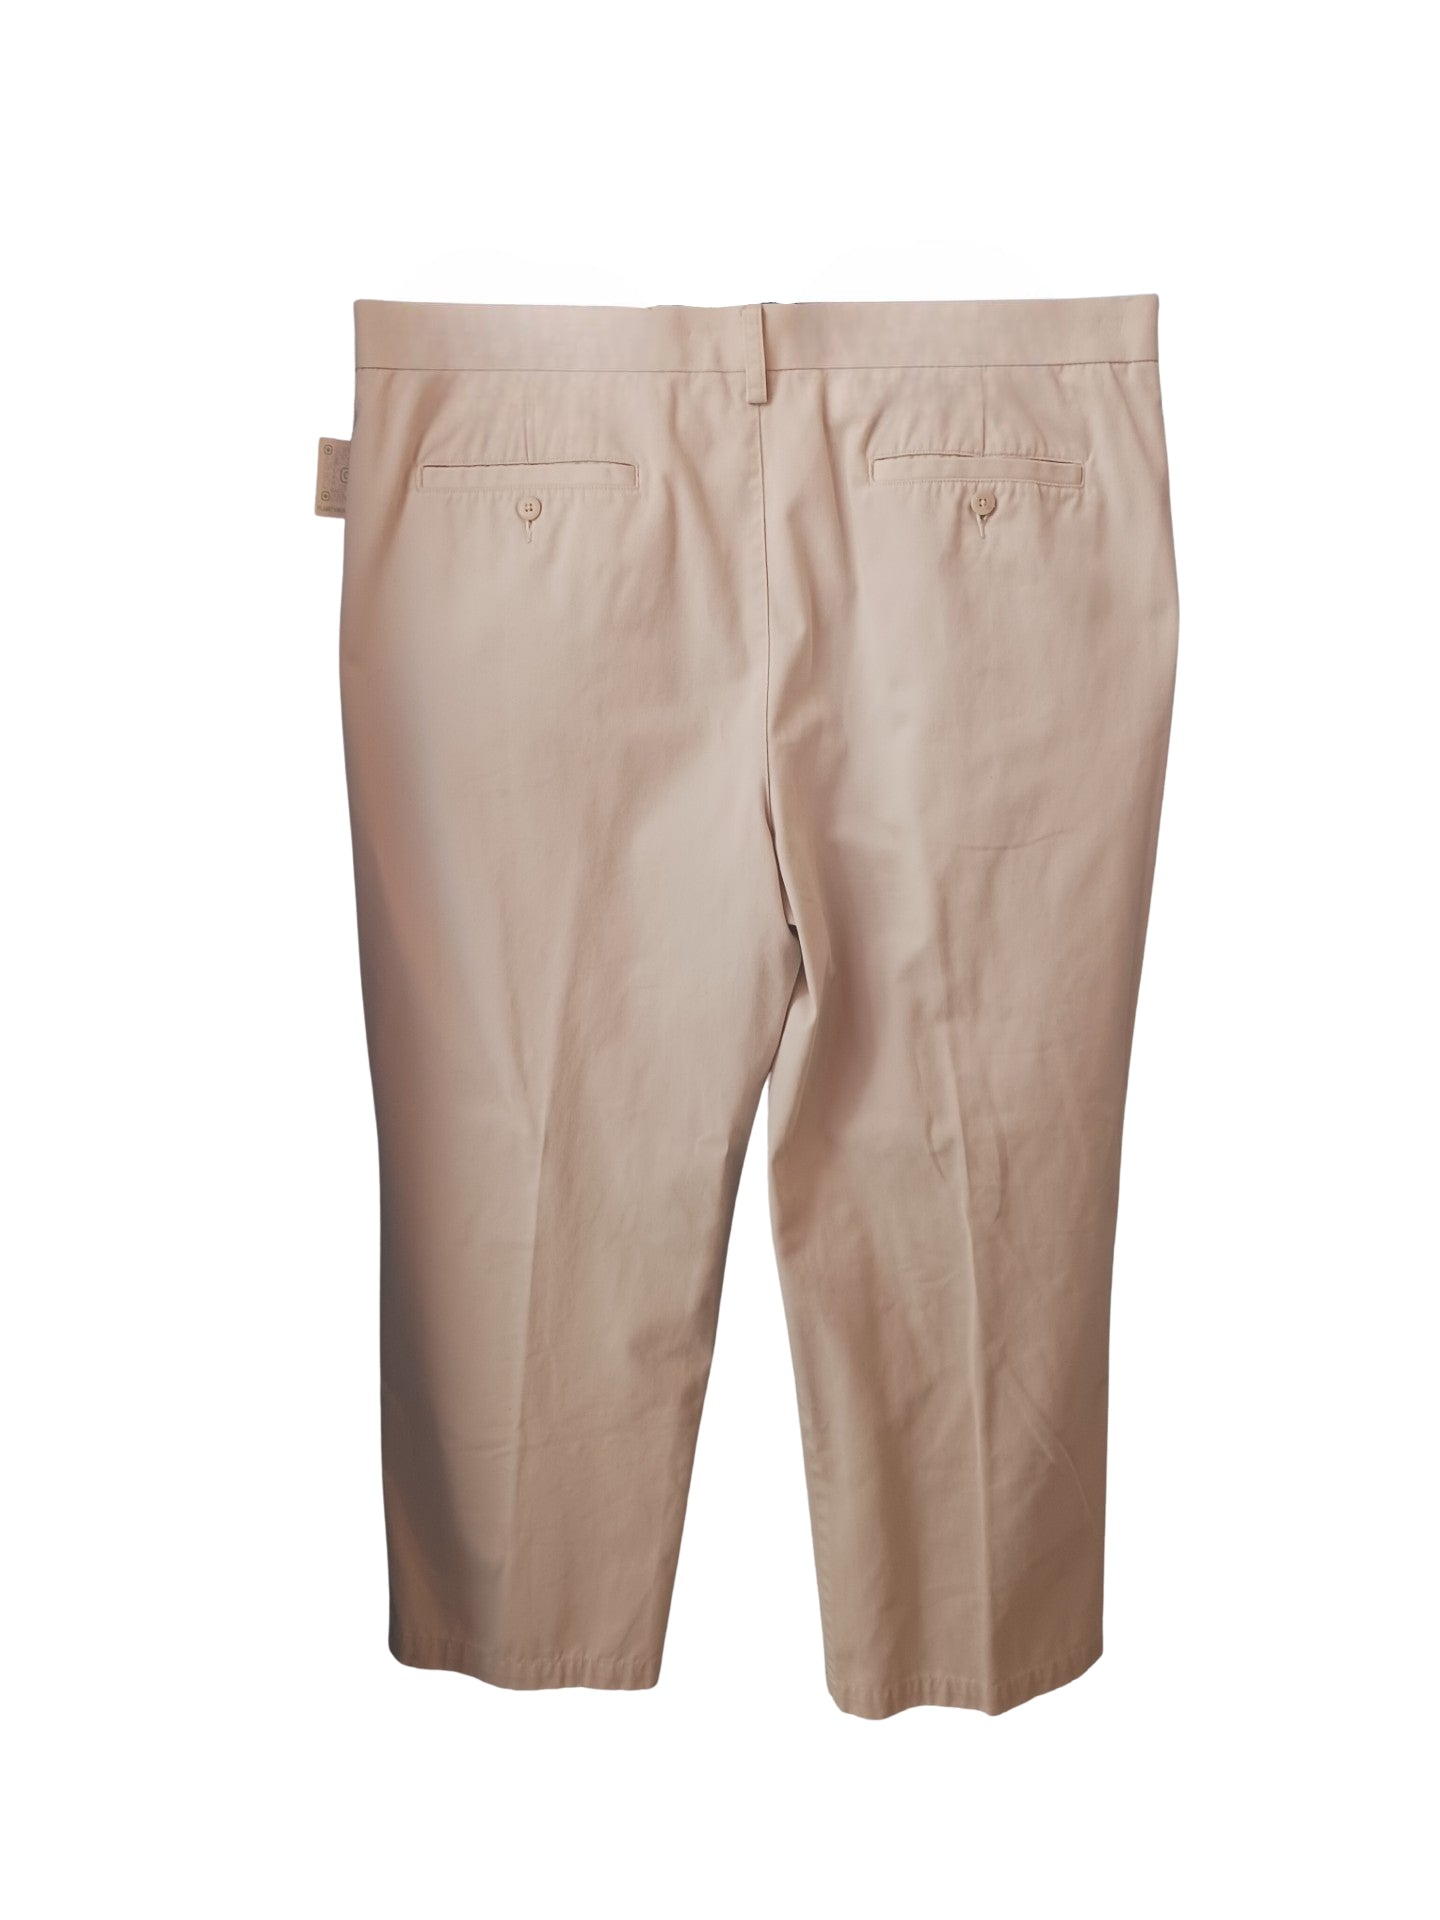 Croft&Barrow Mens Pleated Pants, Size 40×30